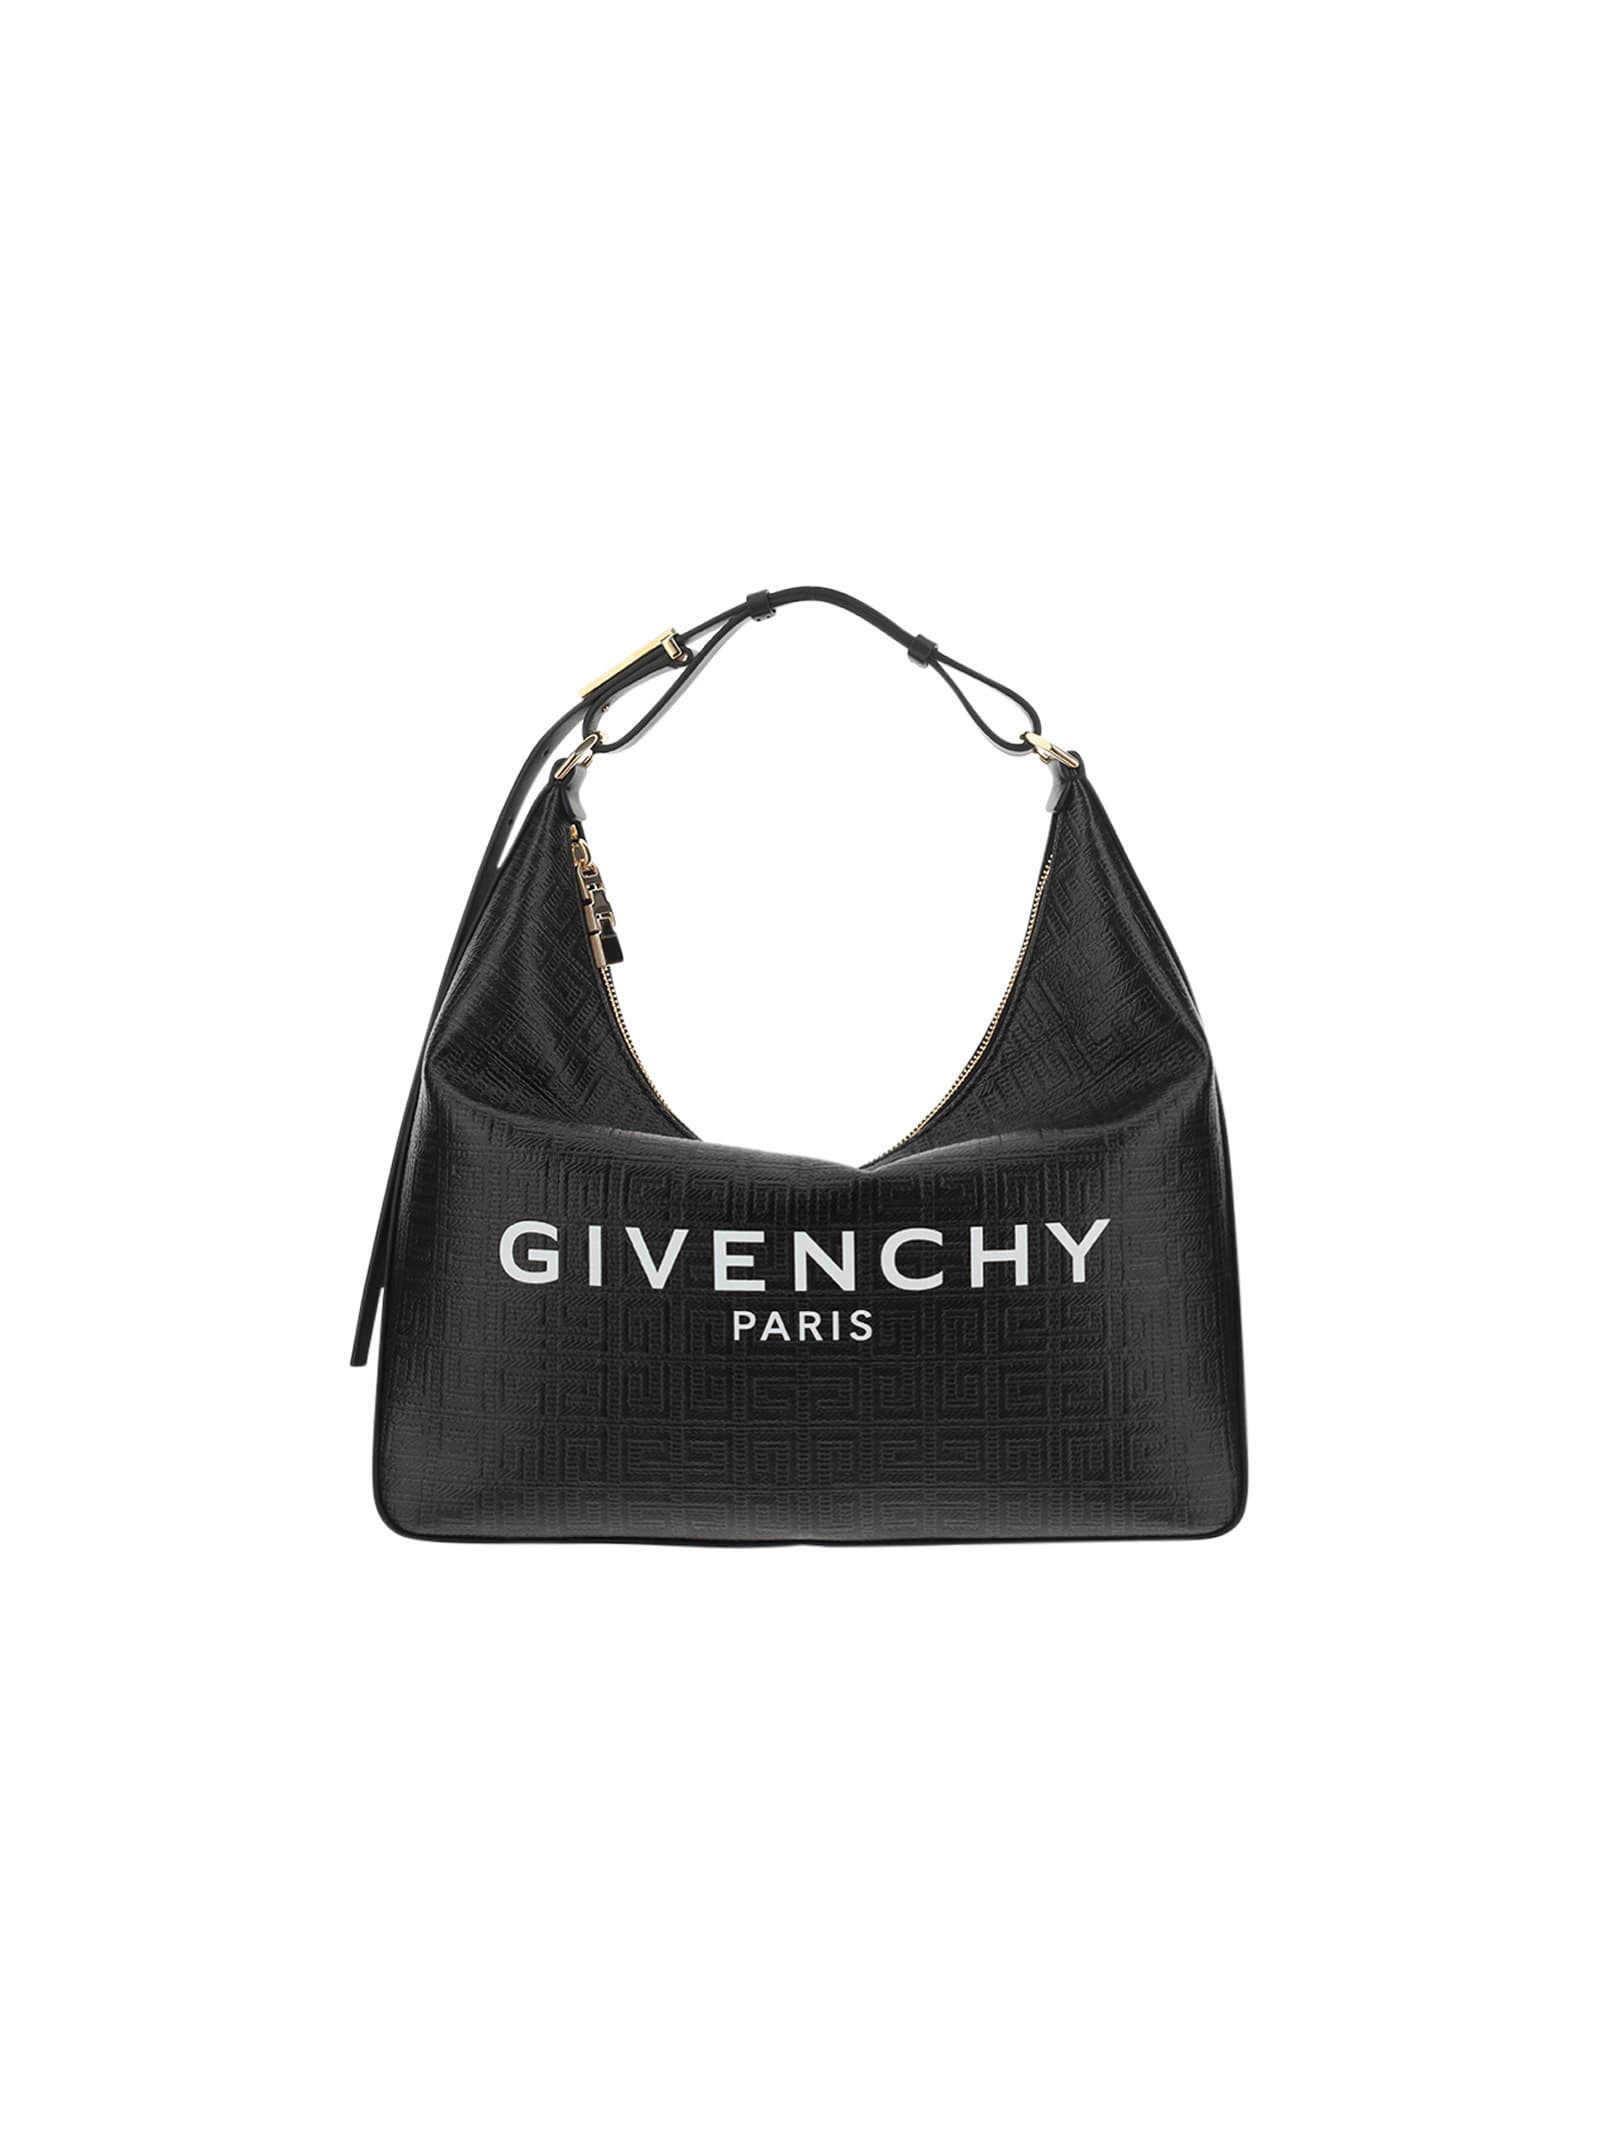 Givenchy Moon Cut Out Bag